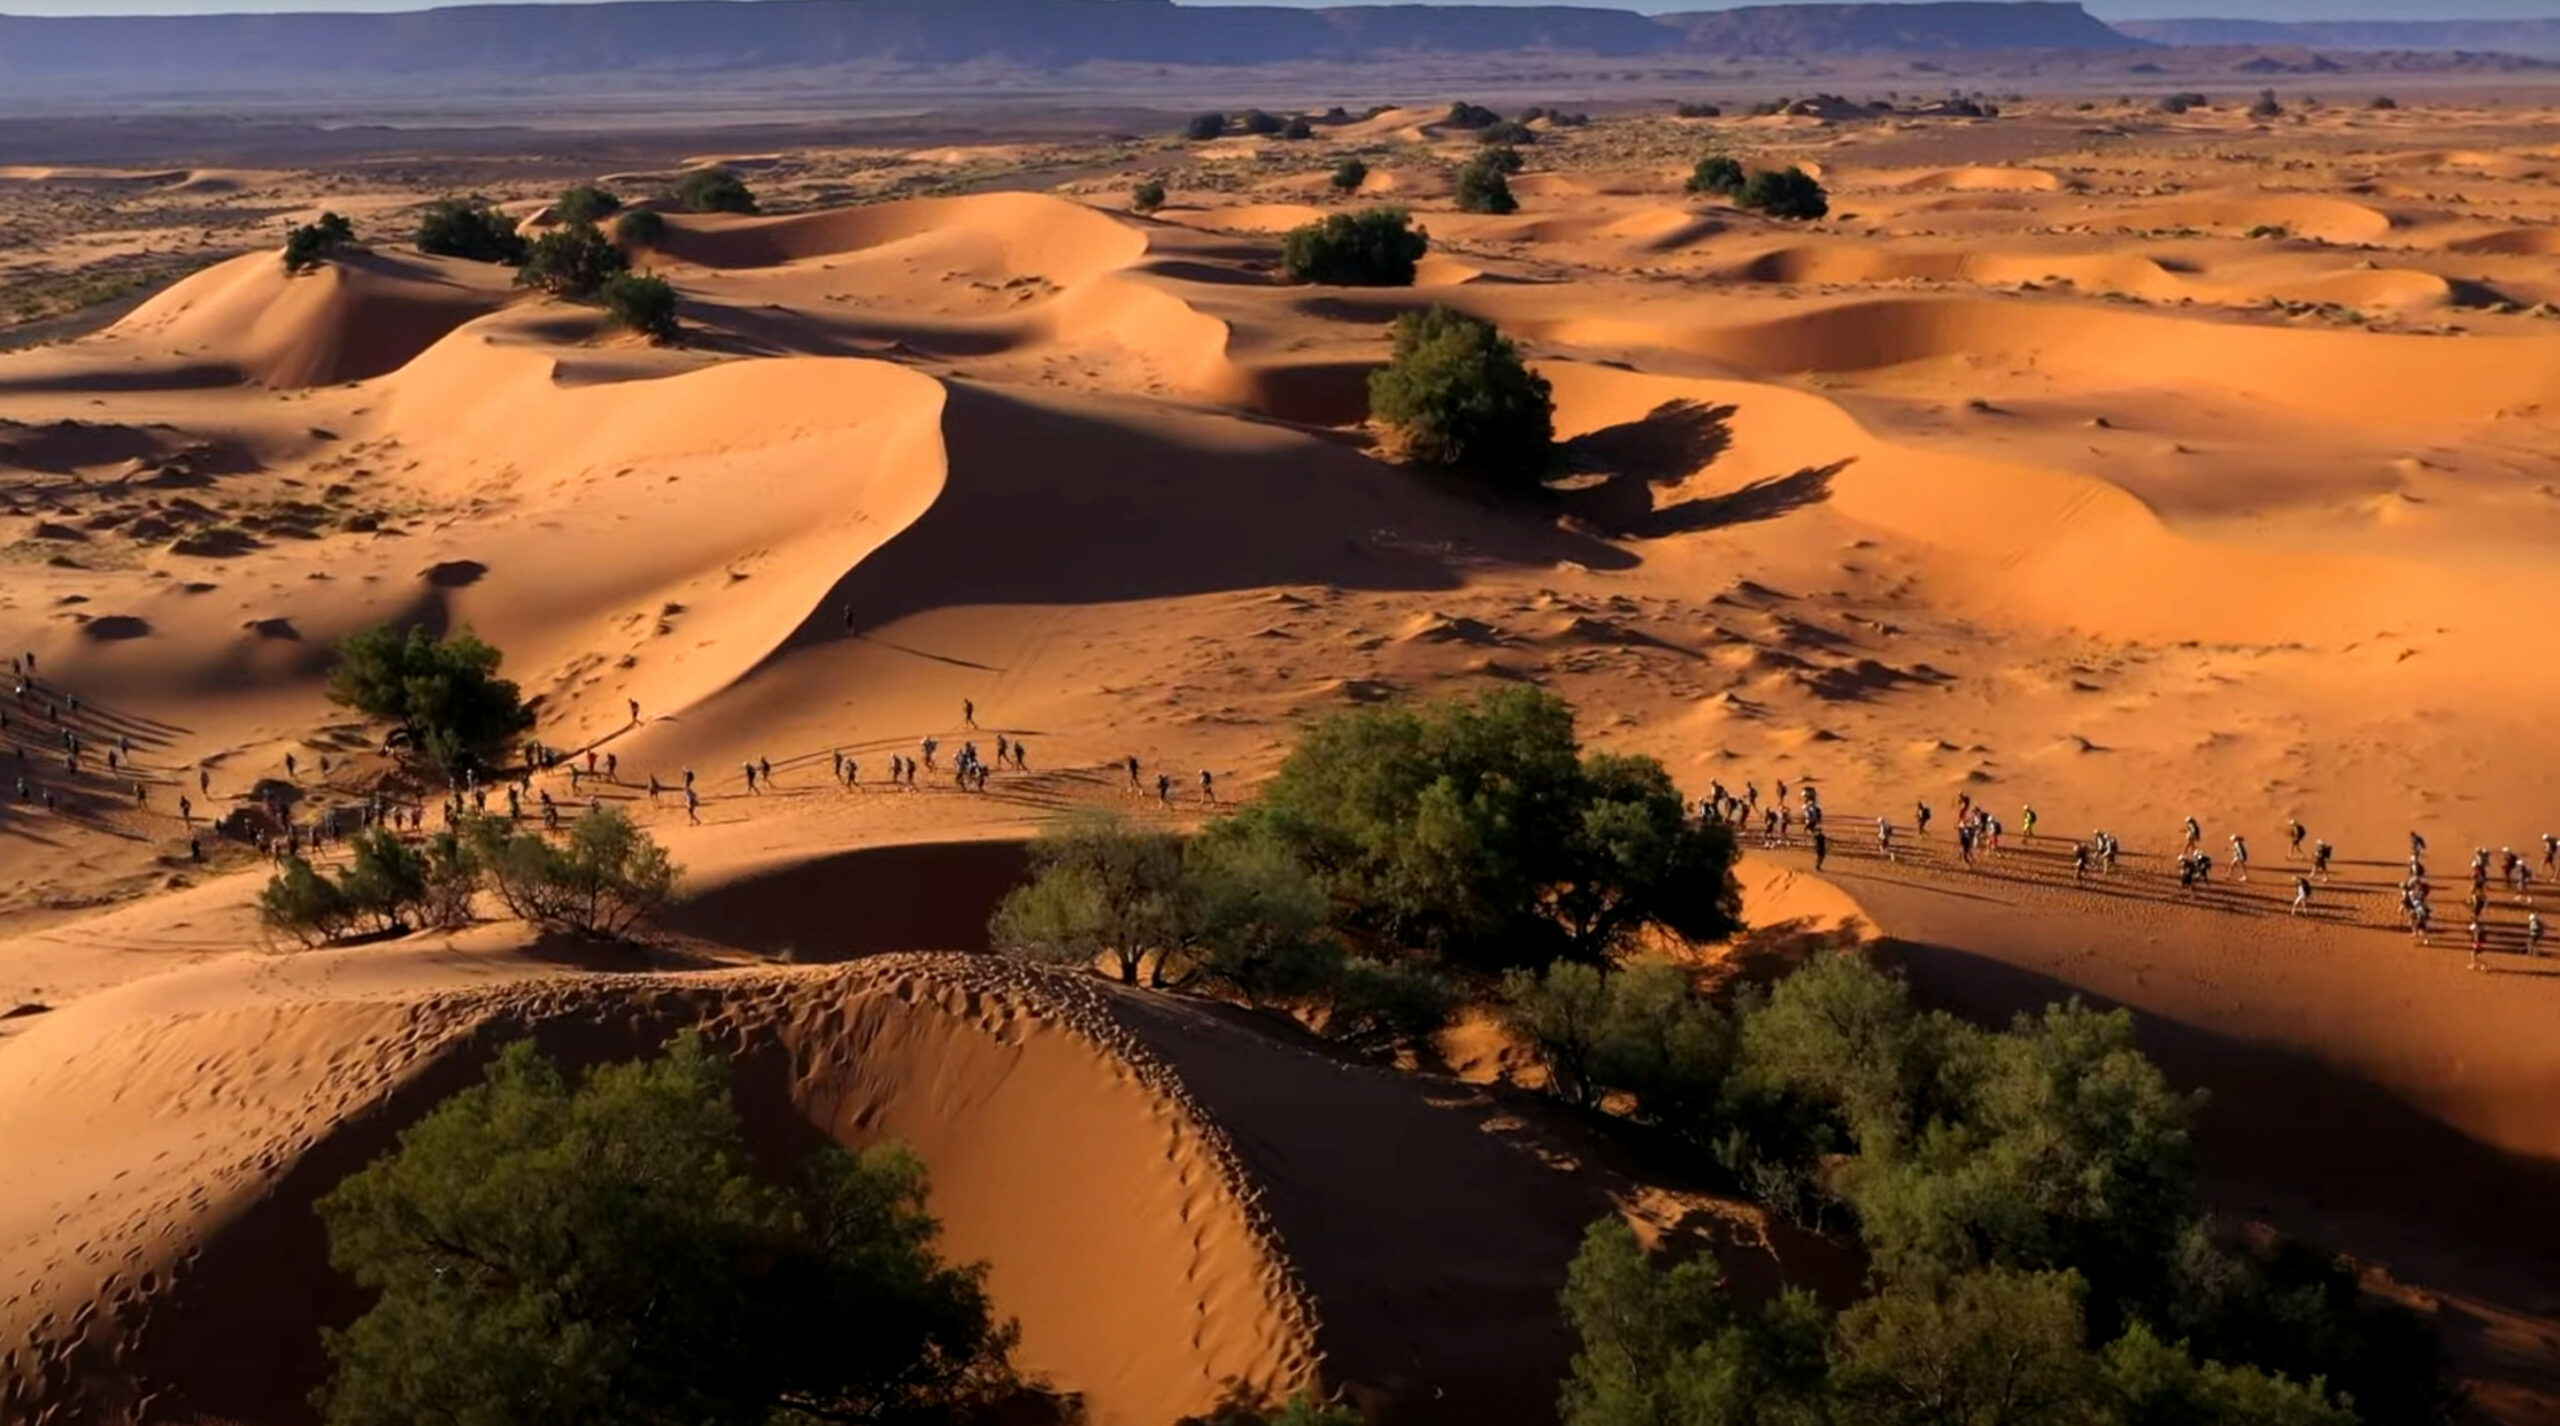 Participants running through sand dunes in the Sahara Desert